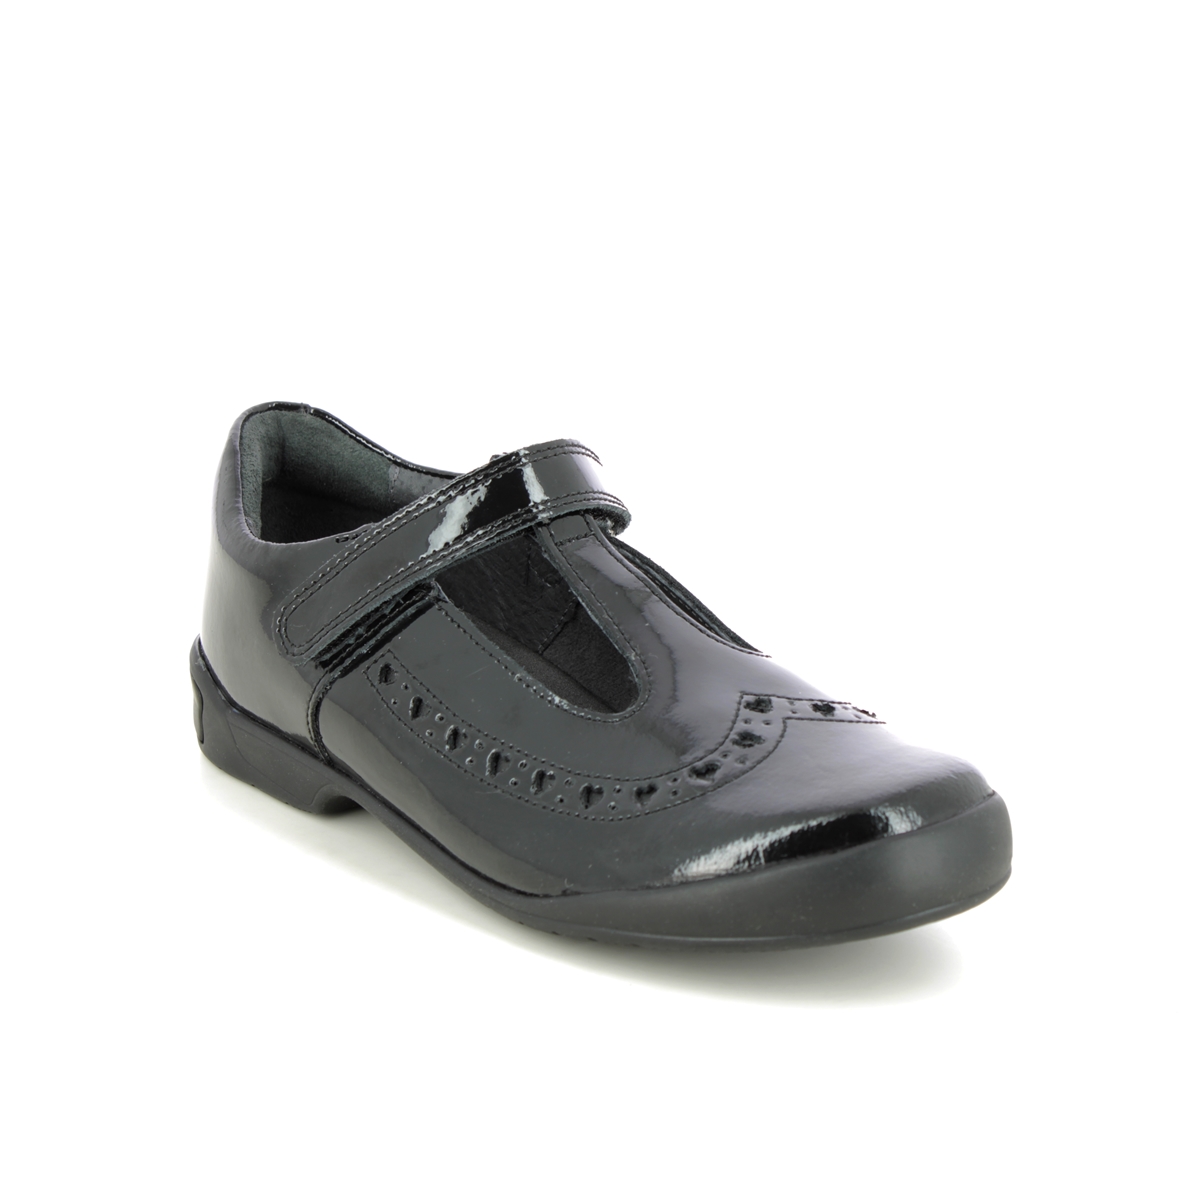 Start Rite - Leapfrog In Black Patent 278937G In Size 9 In Plain Black Patent For School Girls Shoes  In Black Patent For kids